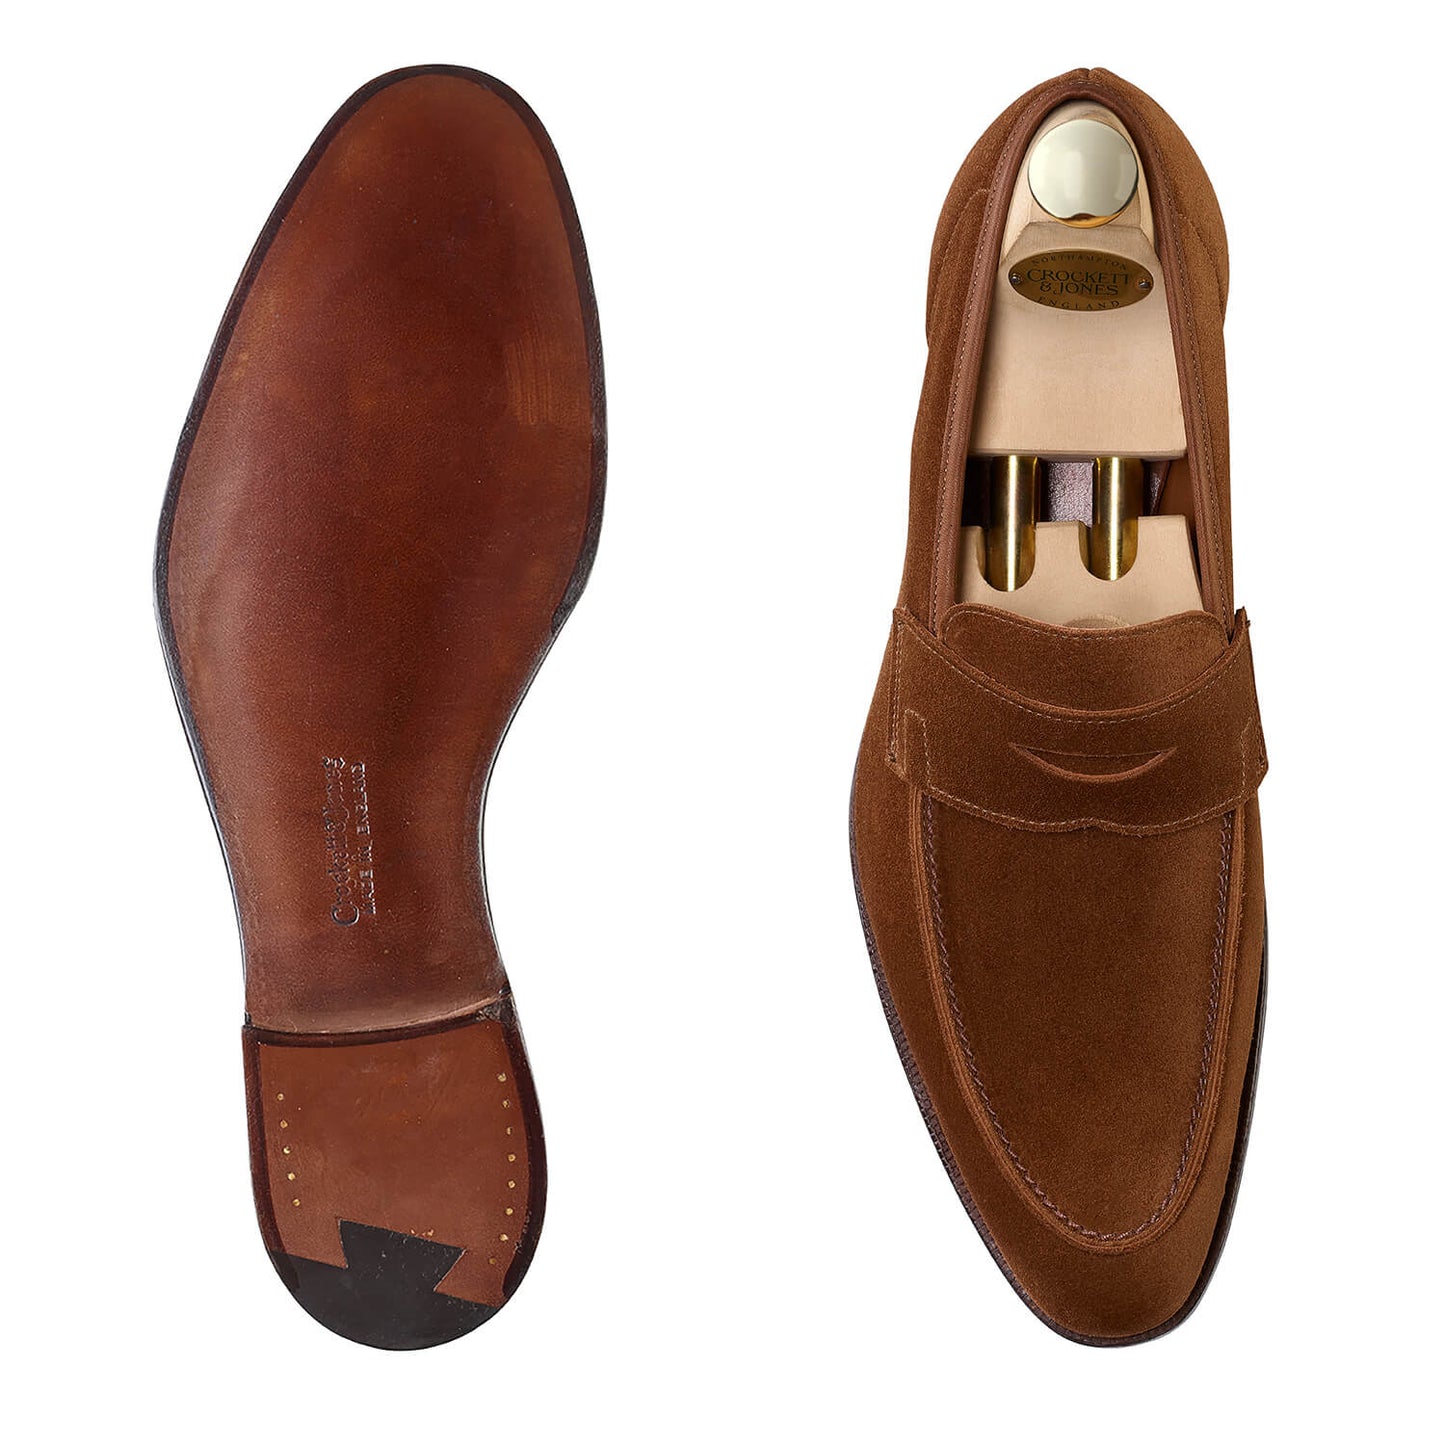 Cadogan, tobacco suede penny loafer made in leather, branded Crockett & Jones